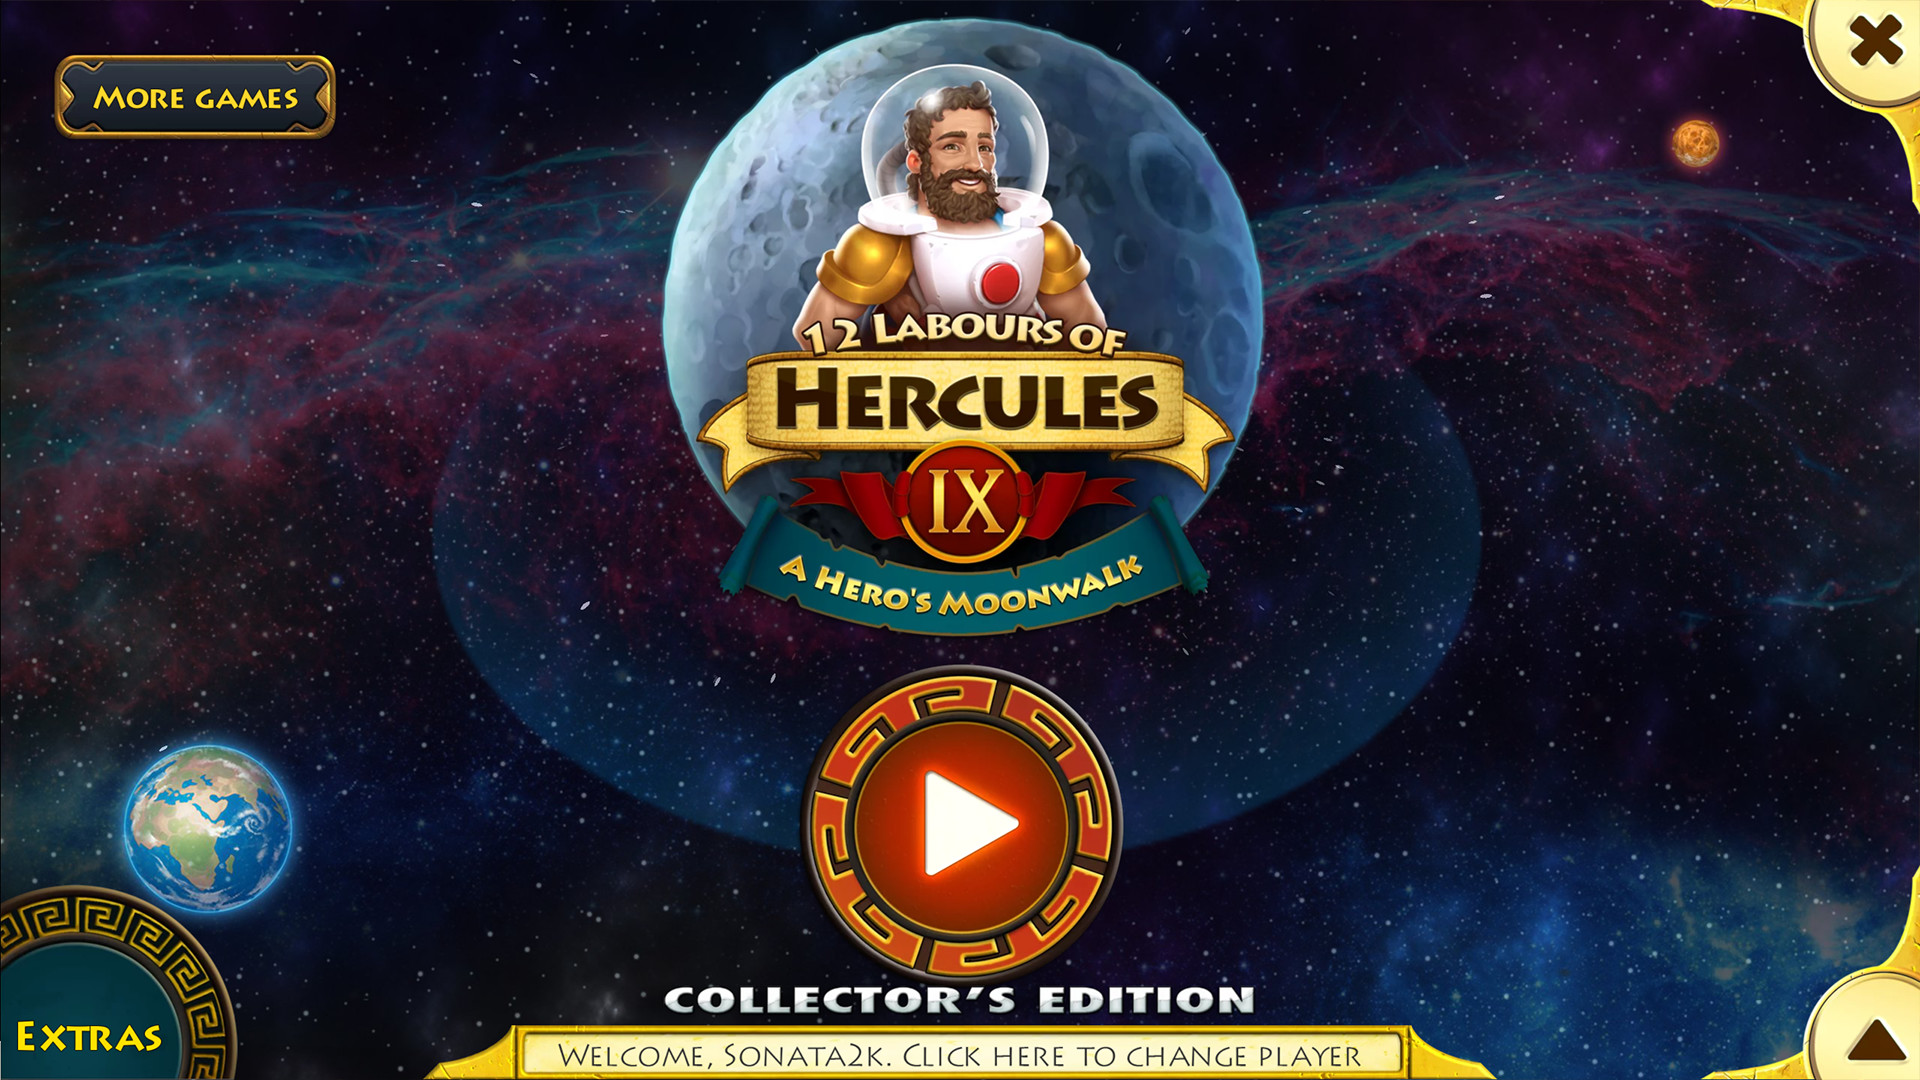 12 Labours of Hercules IX: A Hero's Moonwalk Free Download